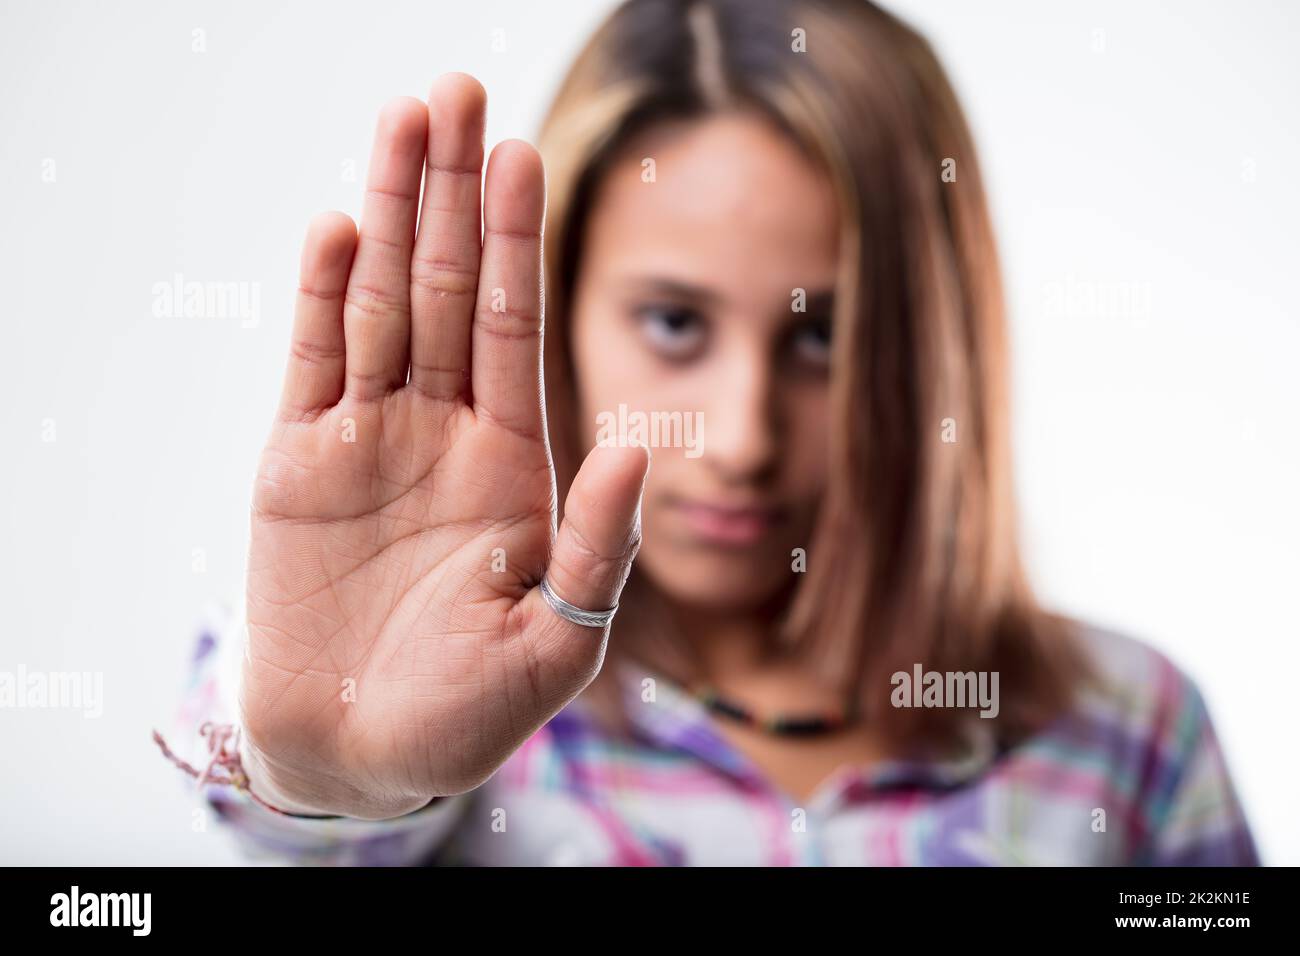 Stern woman making a halt gesture Stock Photo